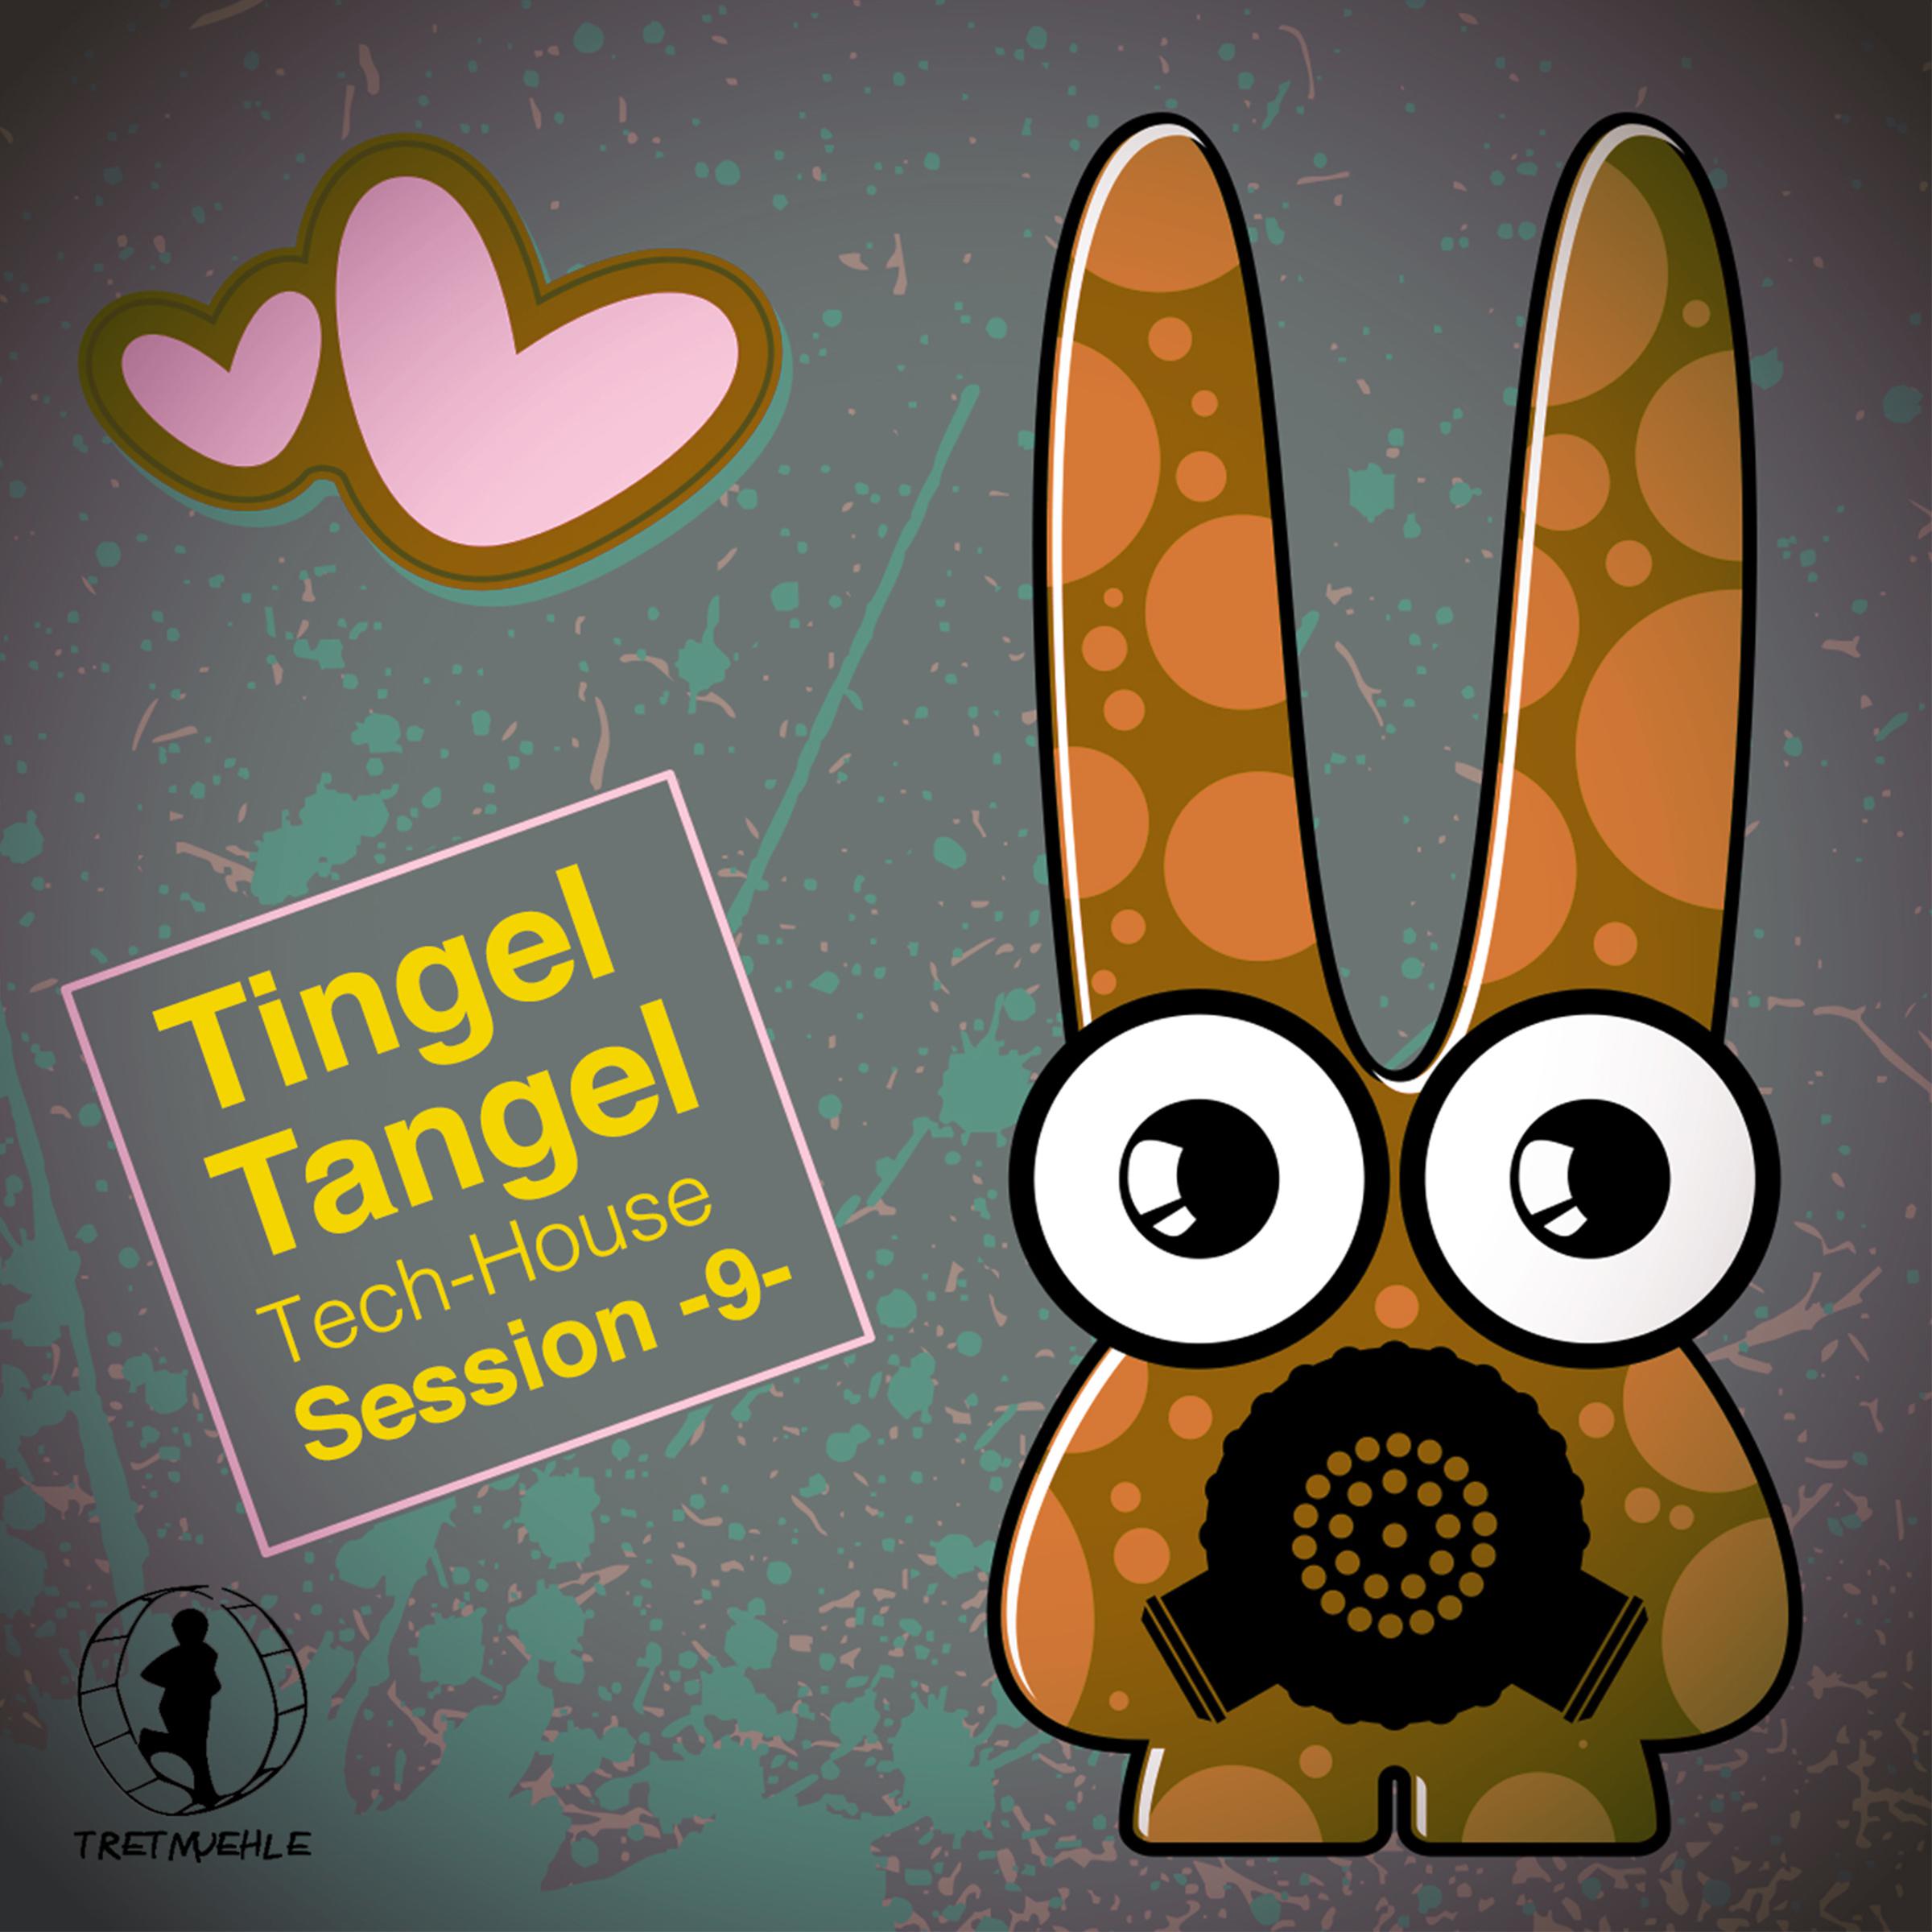 Tingel Tangel, Vol. 9 - Tech House Session